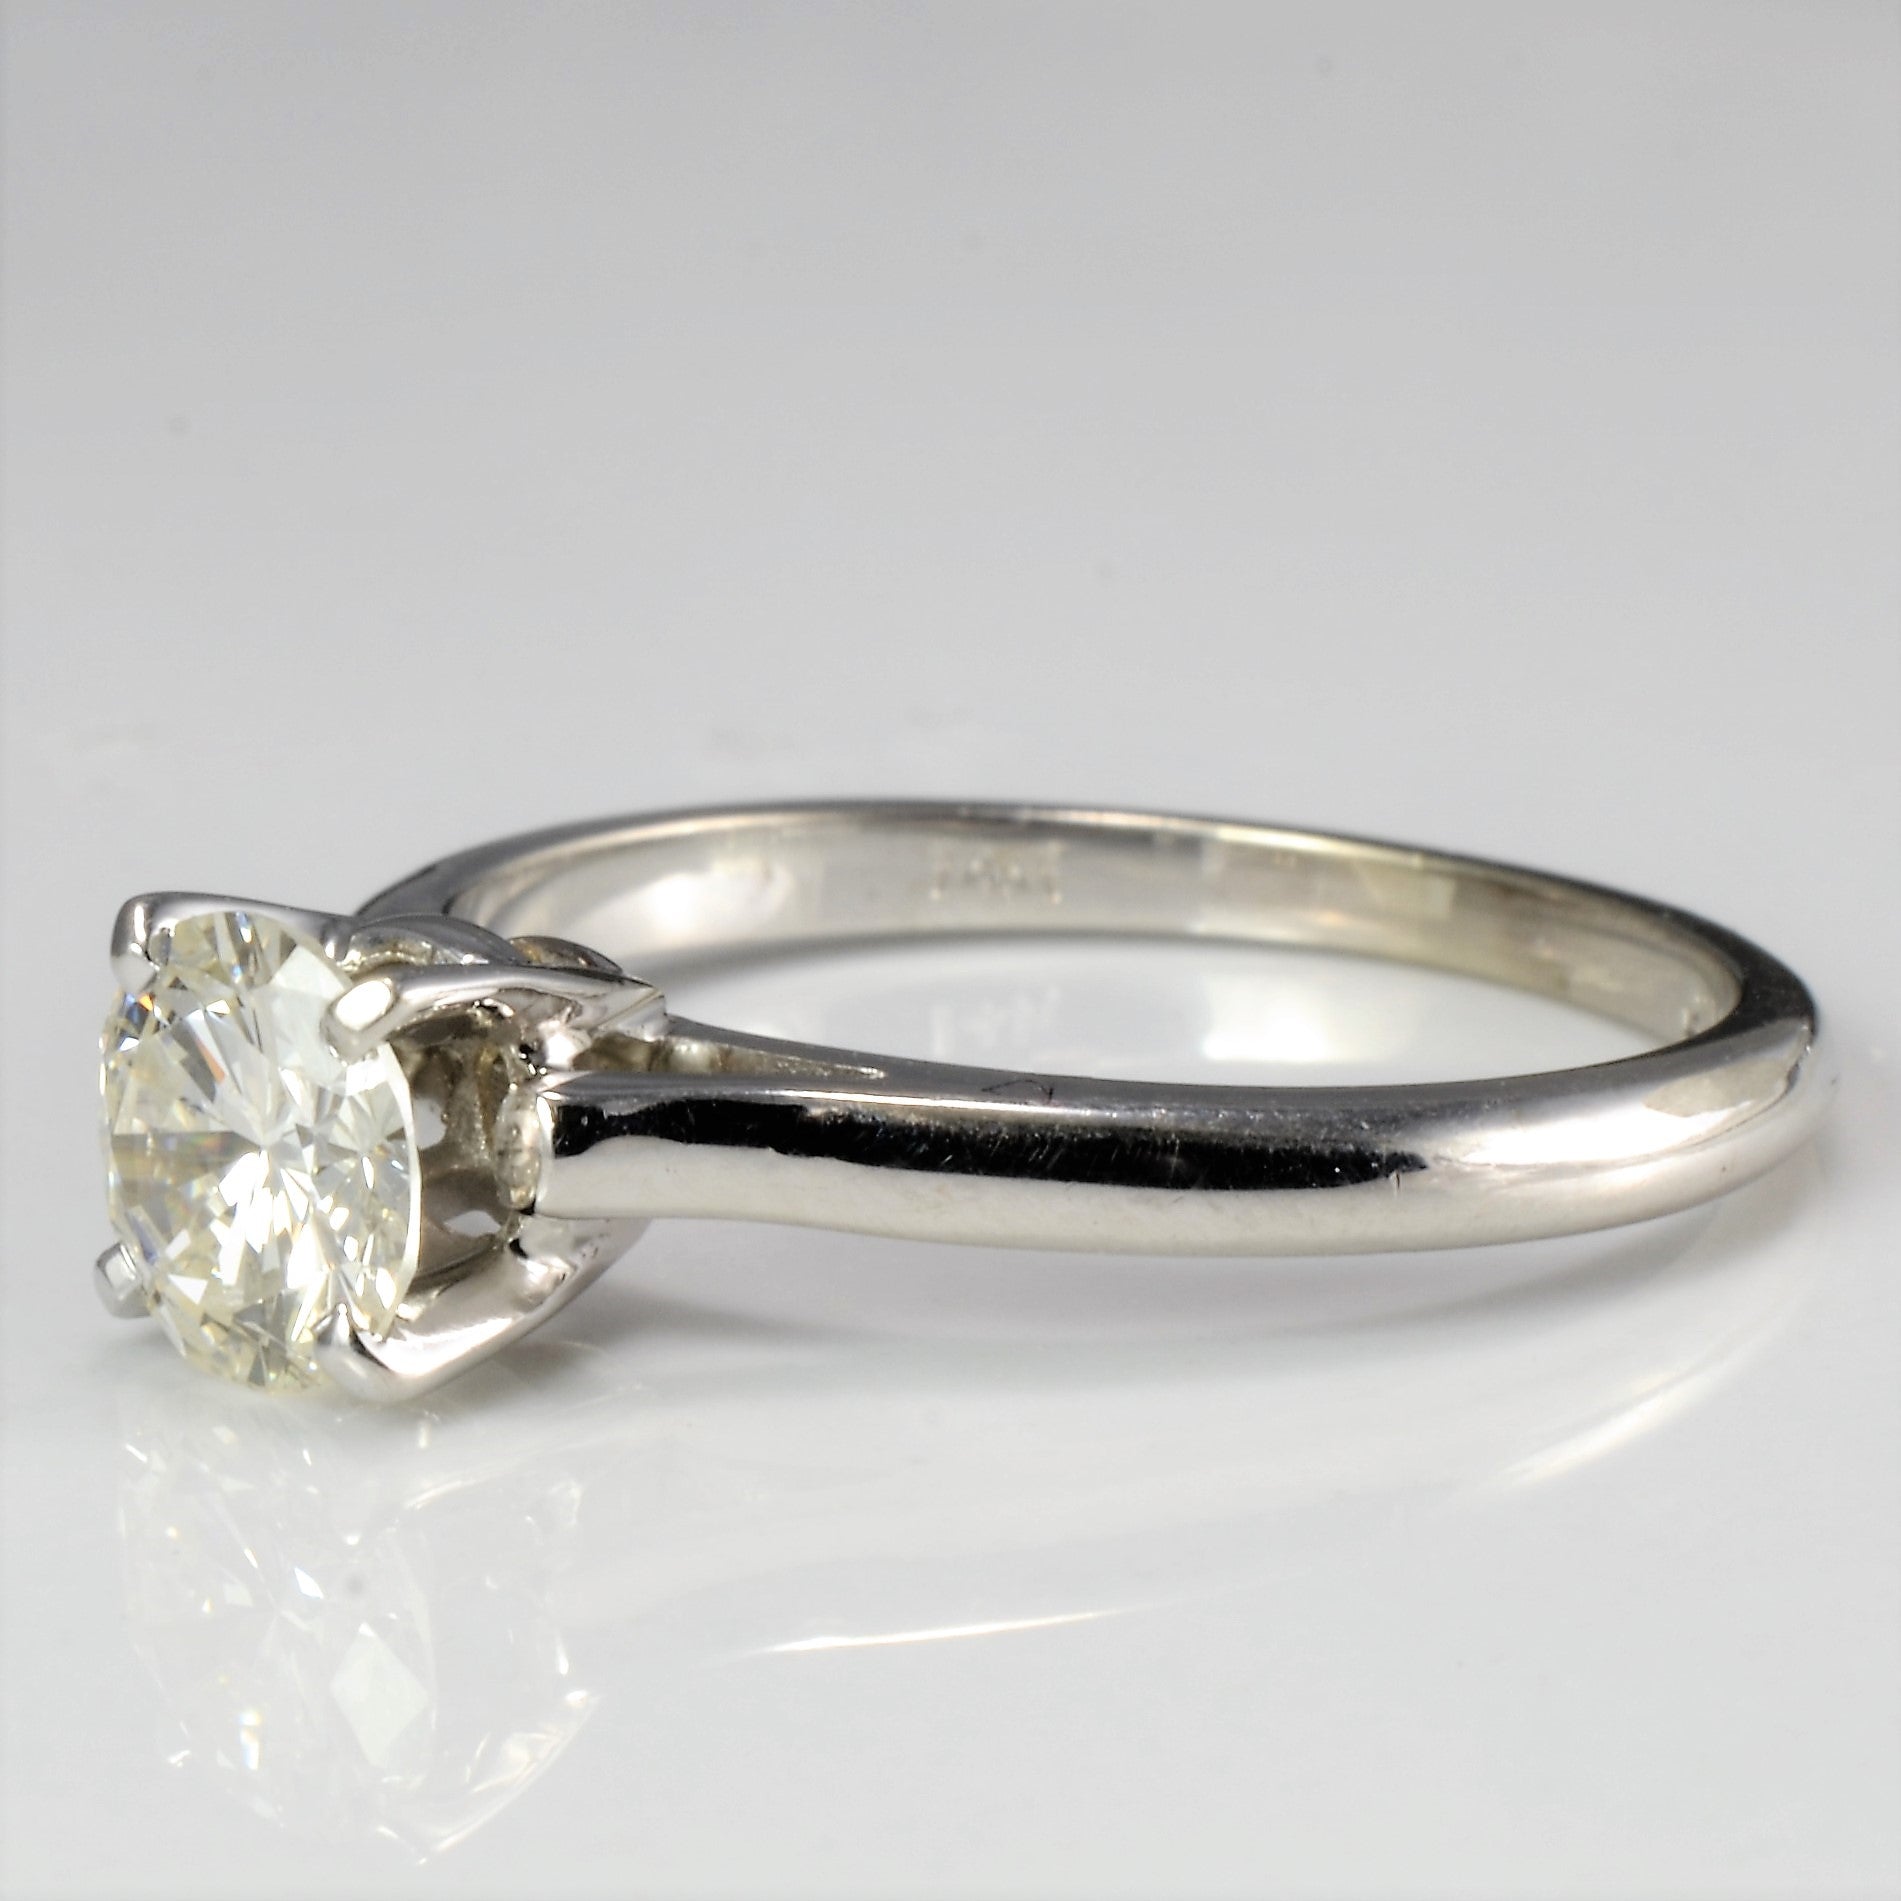 Solitaire Diamond Engagement Ring | 0.93 ct, SZ 7.75 |